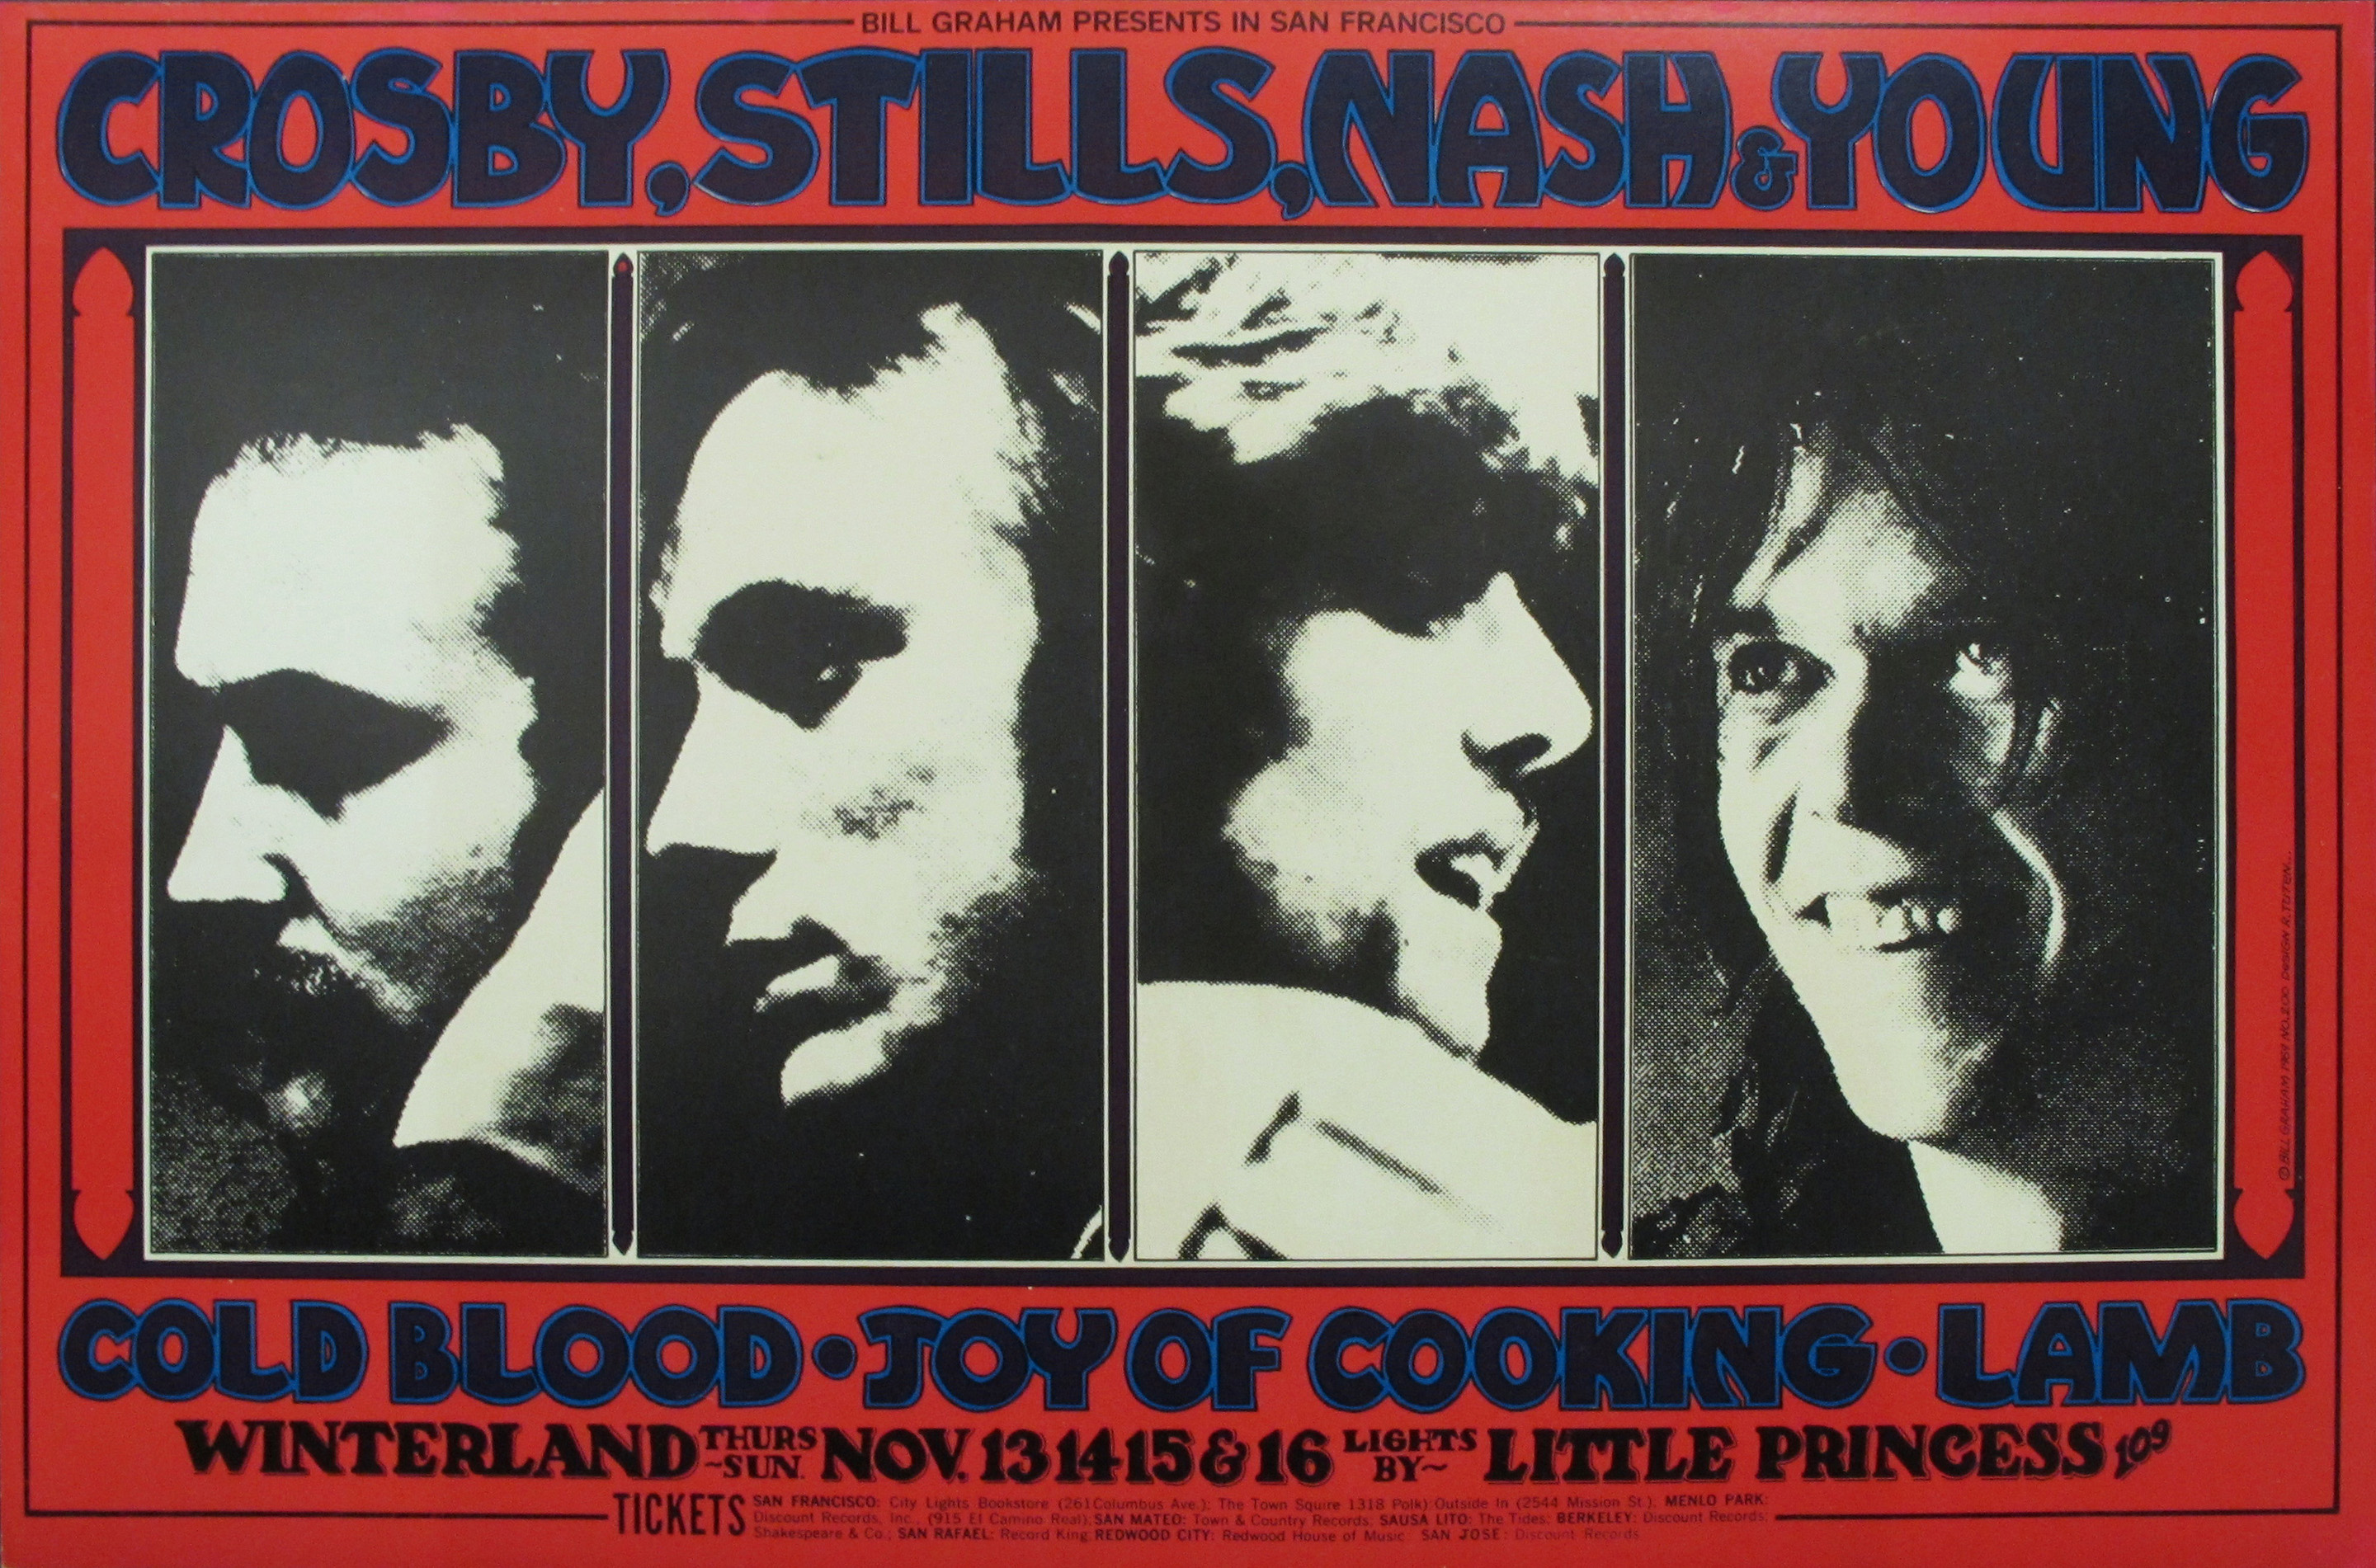 Crosby, Stills, Nash & Young Concert Poster